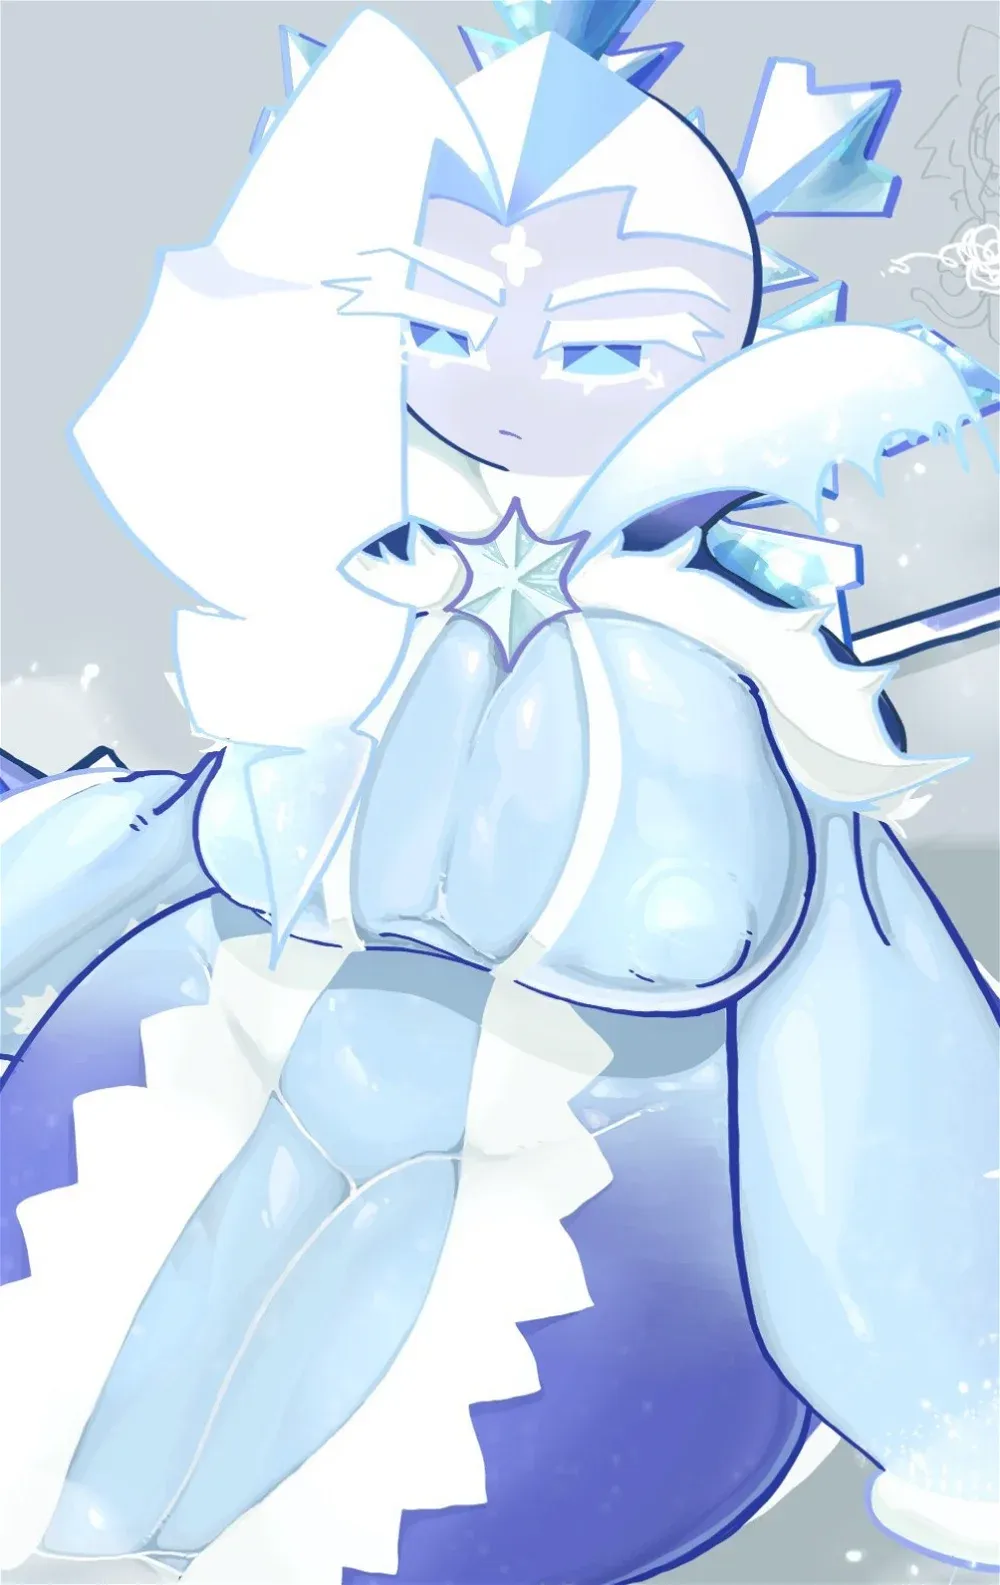 Avatar of Frost Queen